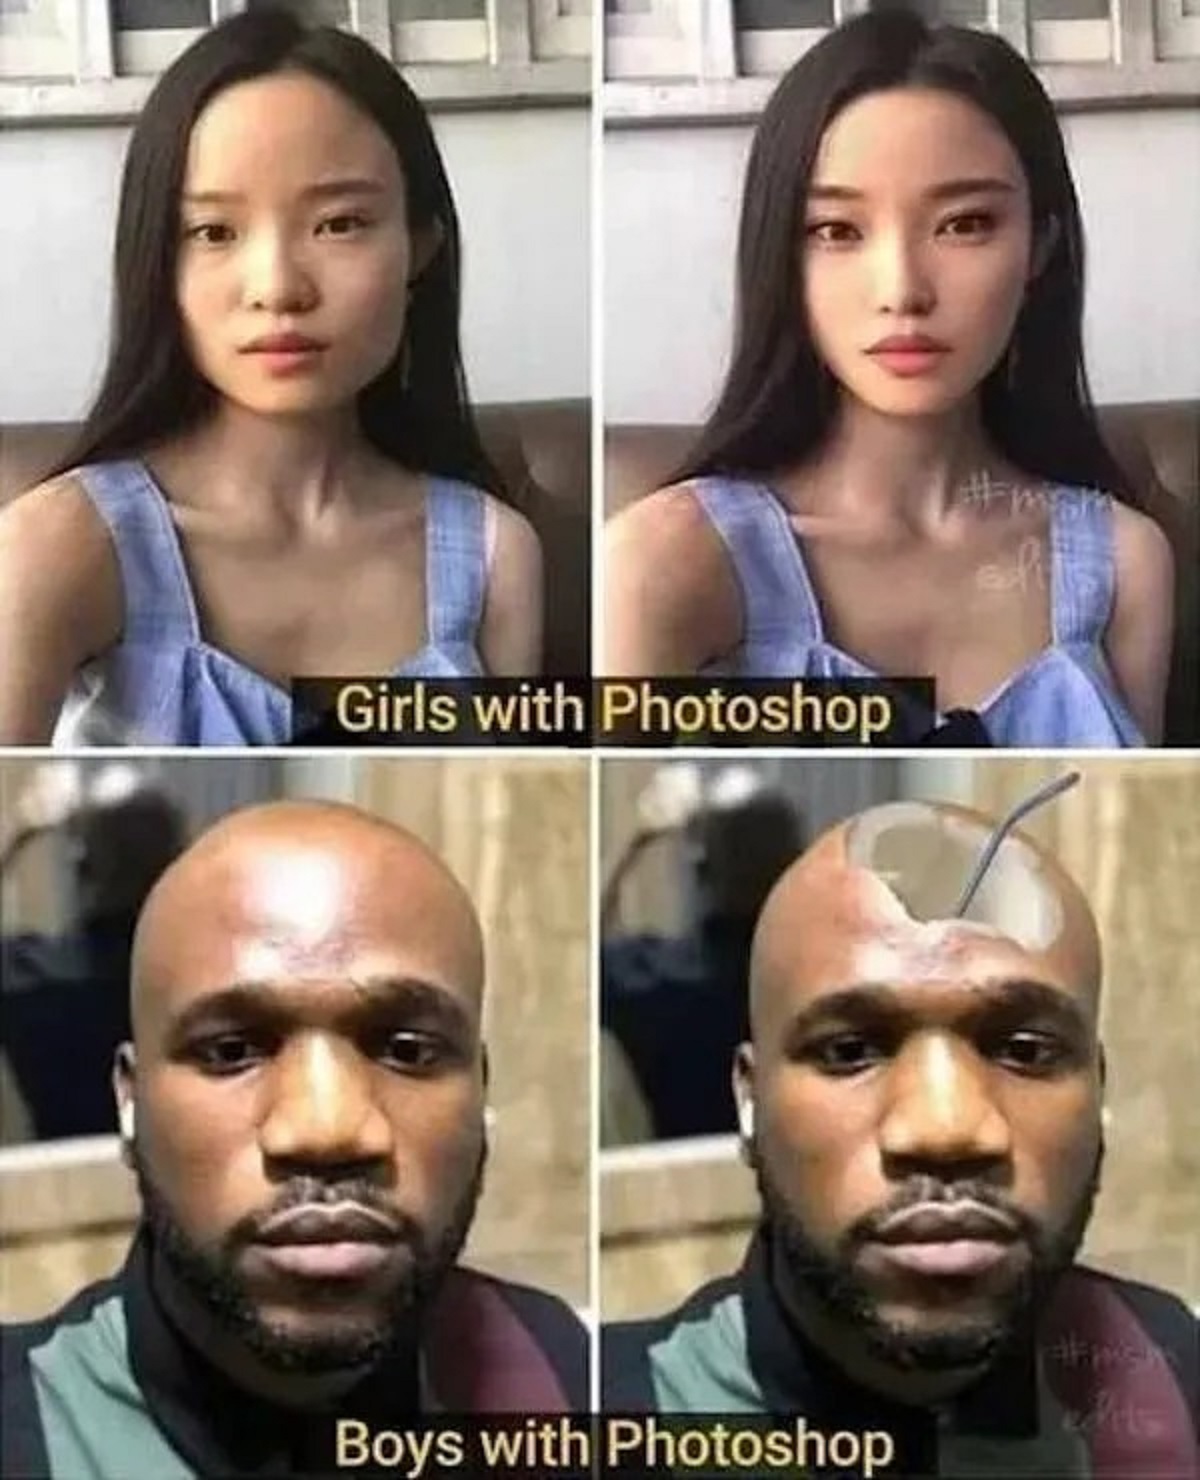 girls photoshop vs boys photoshop - Girls with Photoshop echts Boys with Photoshop